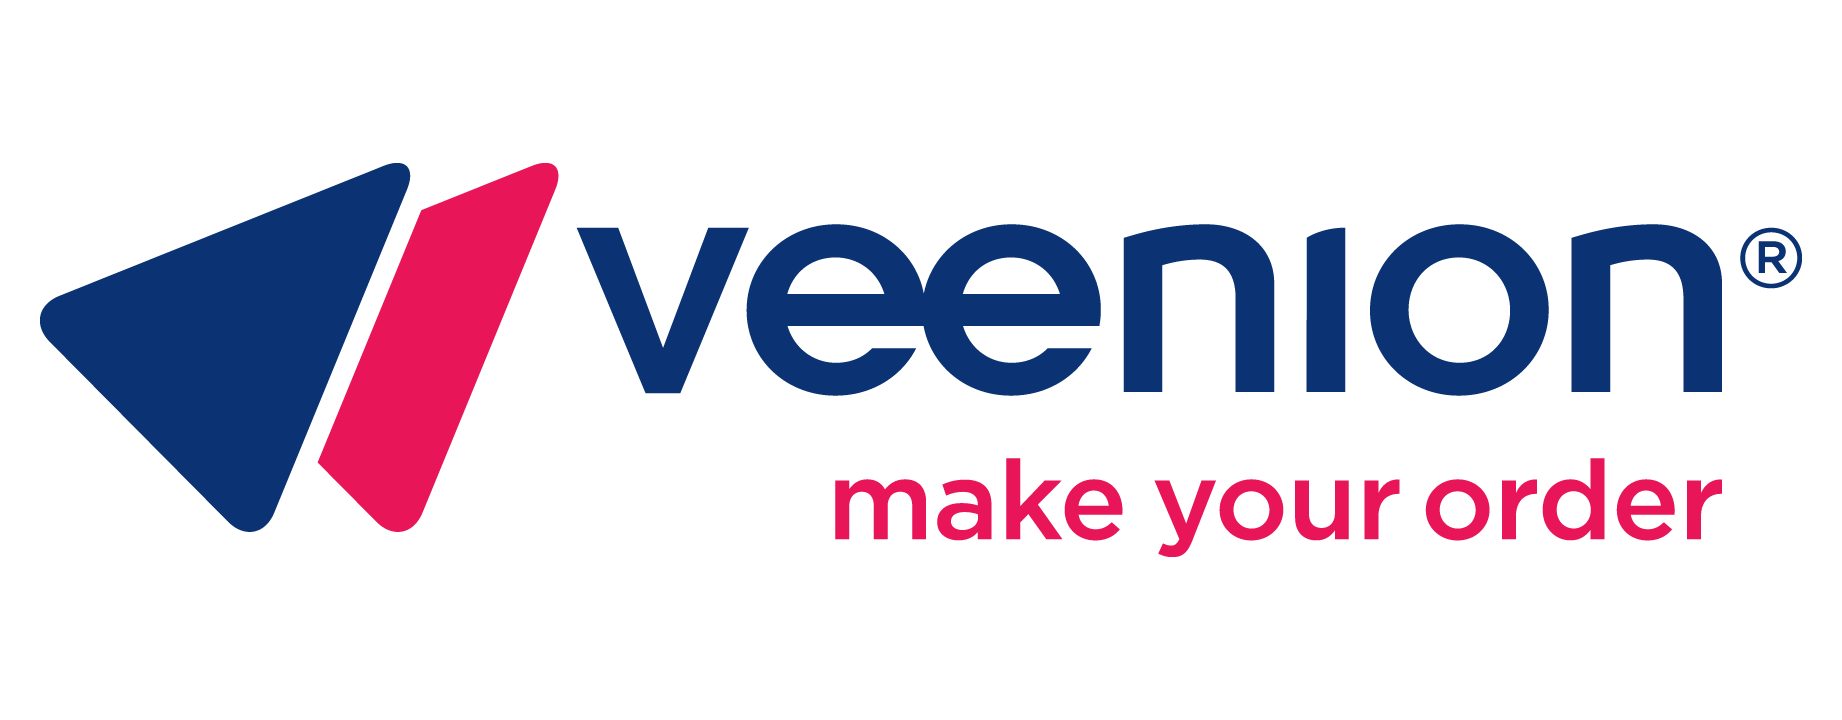 veenion GmbH